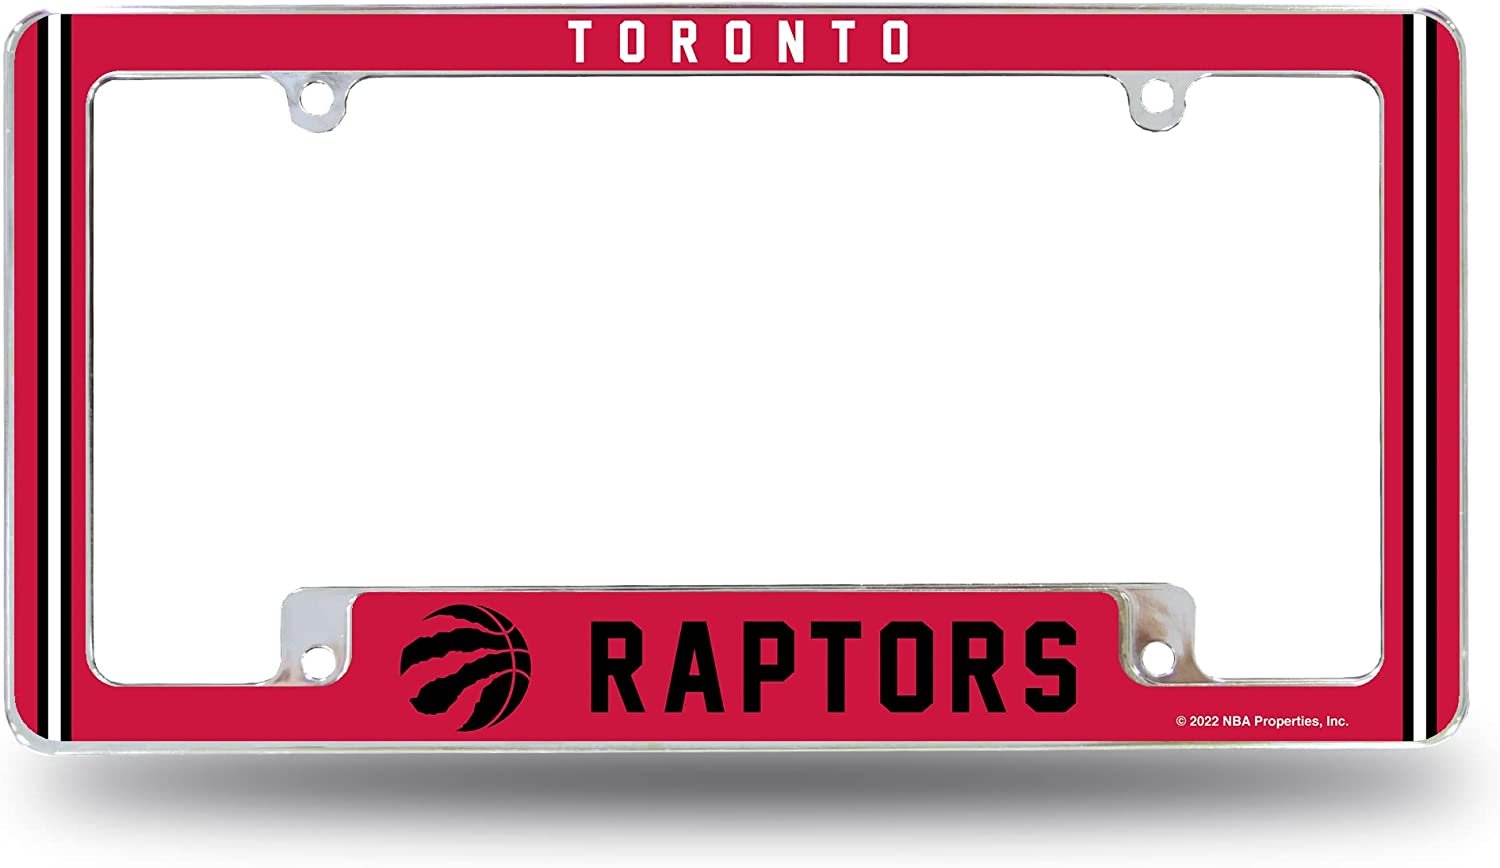 Toronto Raptors Metal License Plate Frame Chrome Tag Cover Alternate Design 6x12 Inch